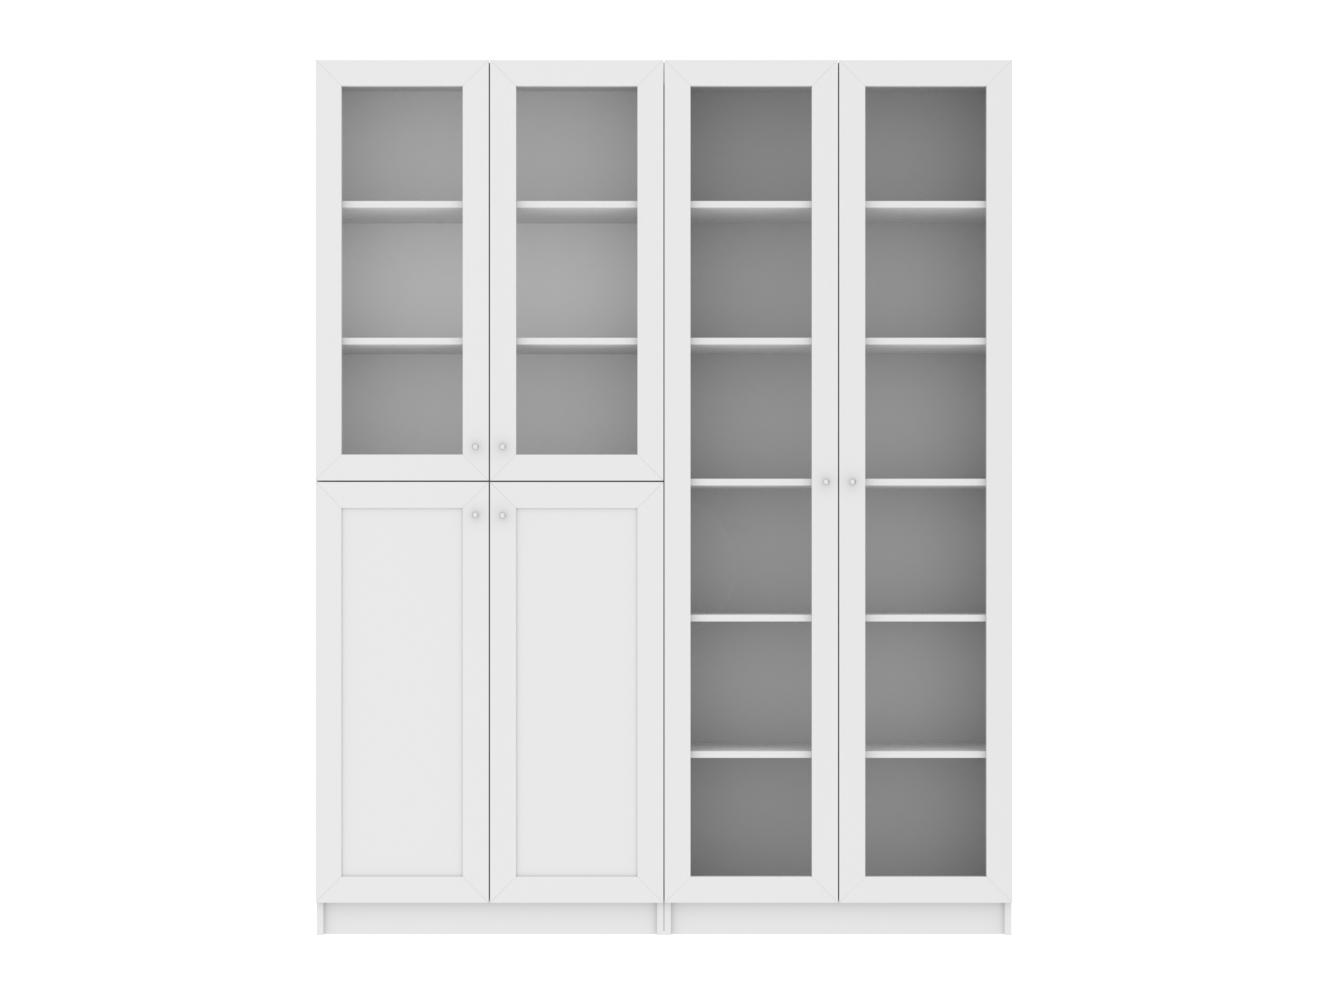 Книжный шкаф Билли 345 white ИКЕА (IKEA) изображение товара